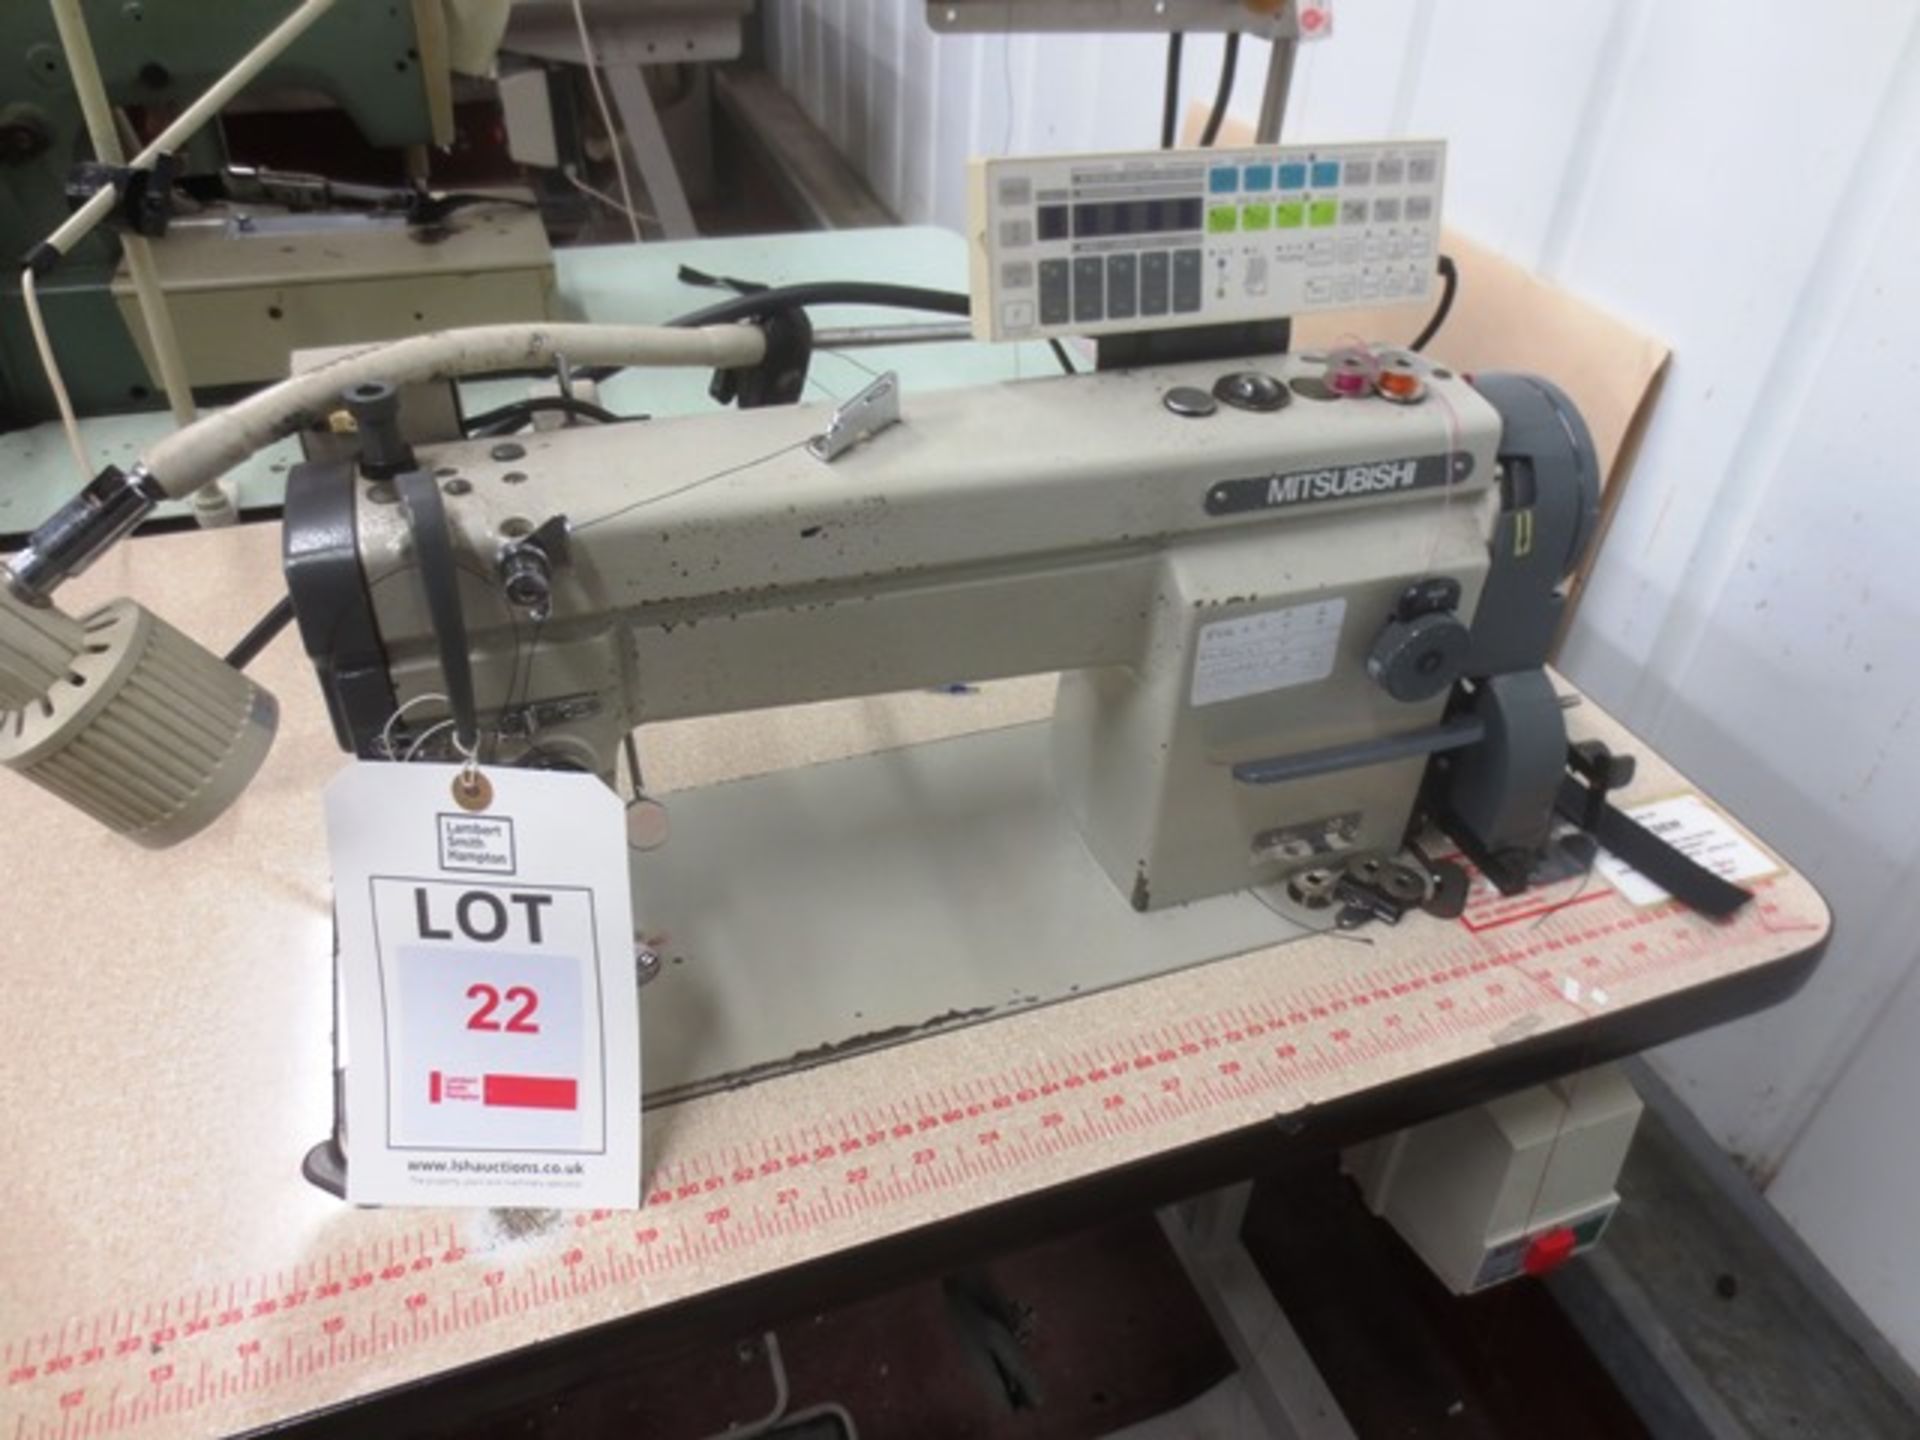 Mitsubishi LS2-2210 flat bed single needle sewing machine, serial no: 695784, XC-E500Y control - Image 2 of 2